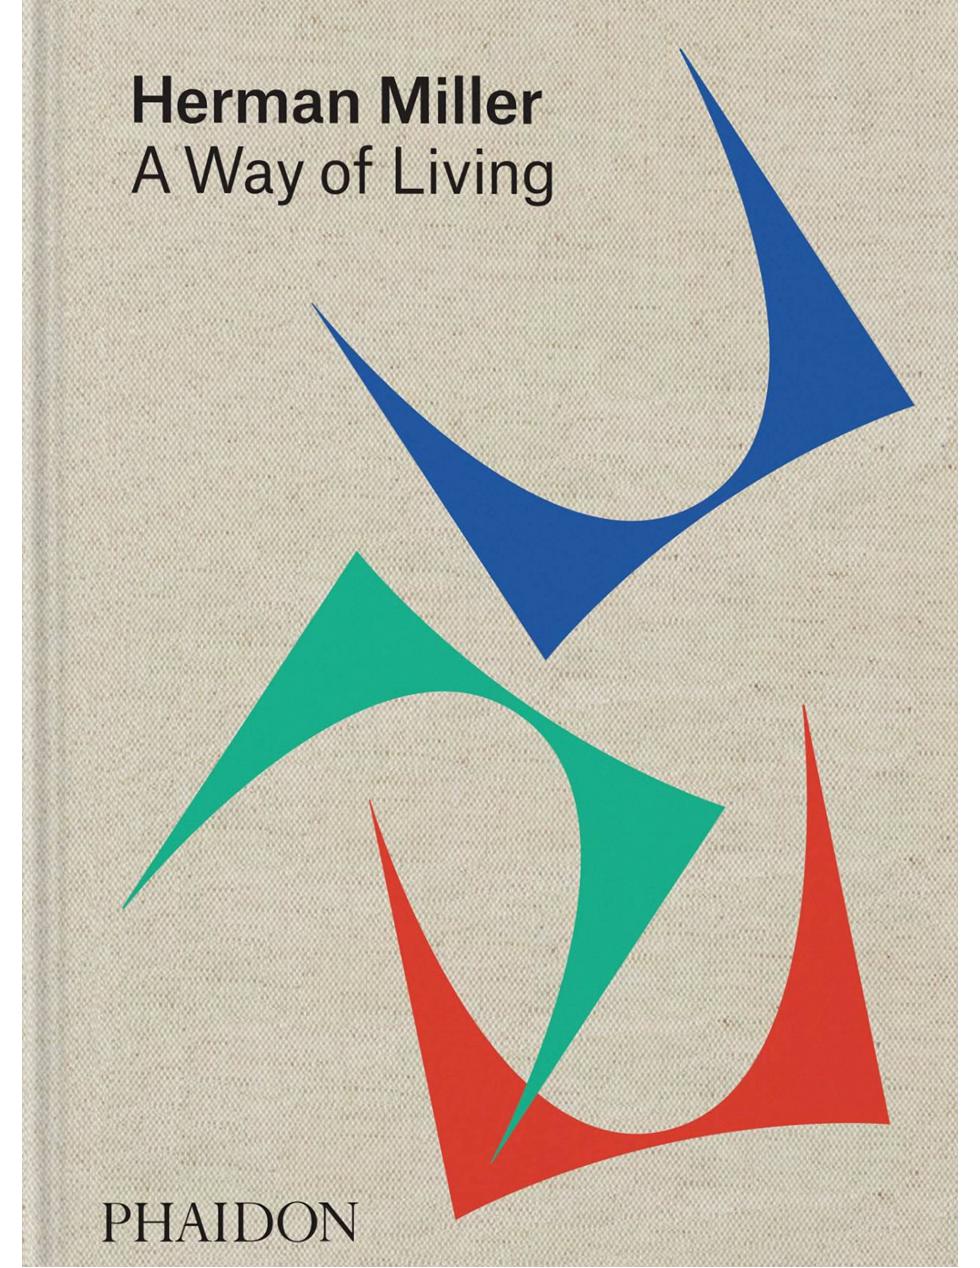 Book: HERMAN MILLER - A Way Of Living